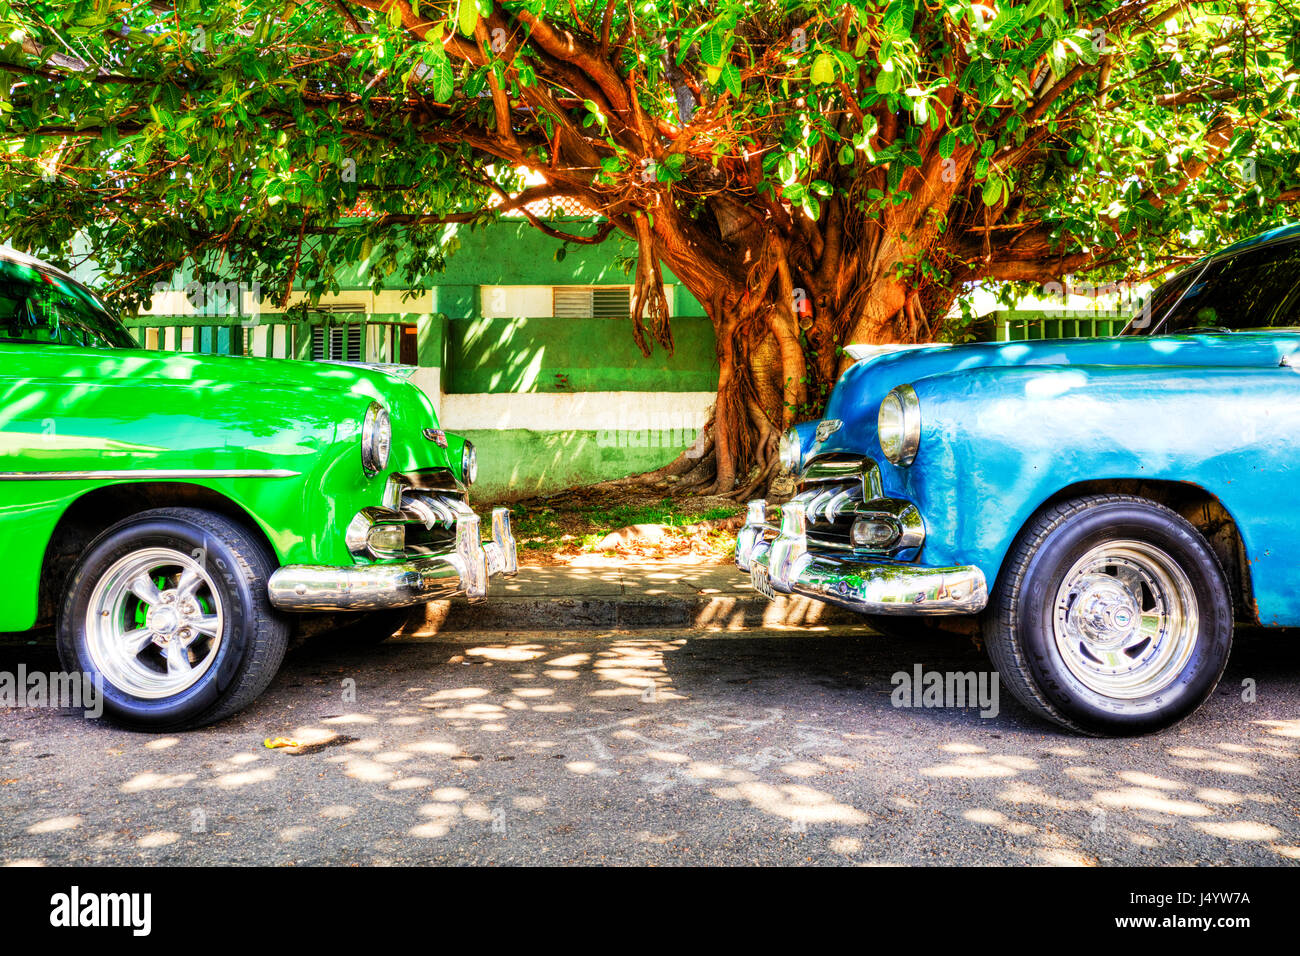 Kubanische Autos kubanischen amerikanischen Oldtimer Kuba Havanna Autos gegenüber einander typischen Autos Kuba Havanna Auto alte Autos in Kuba kubanischen Klassiker Stockfoto